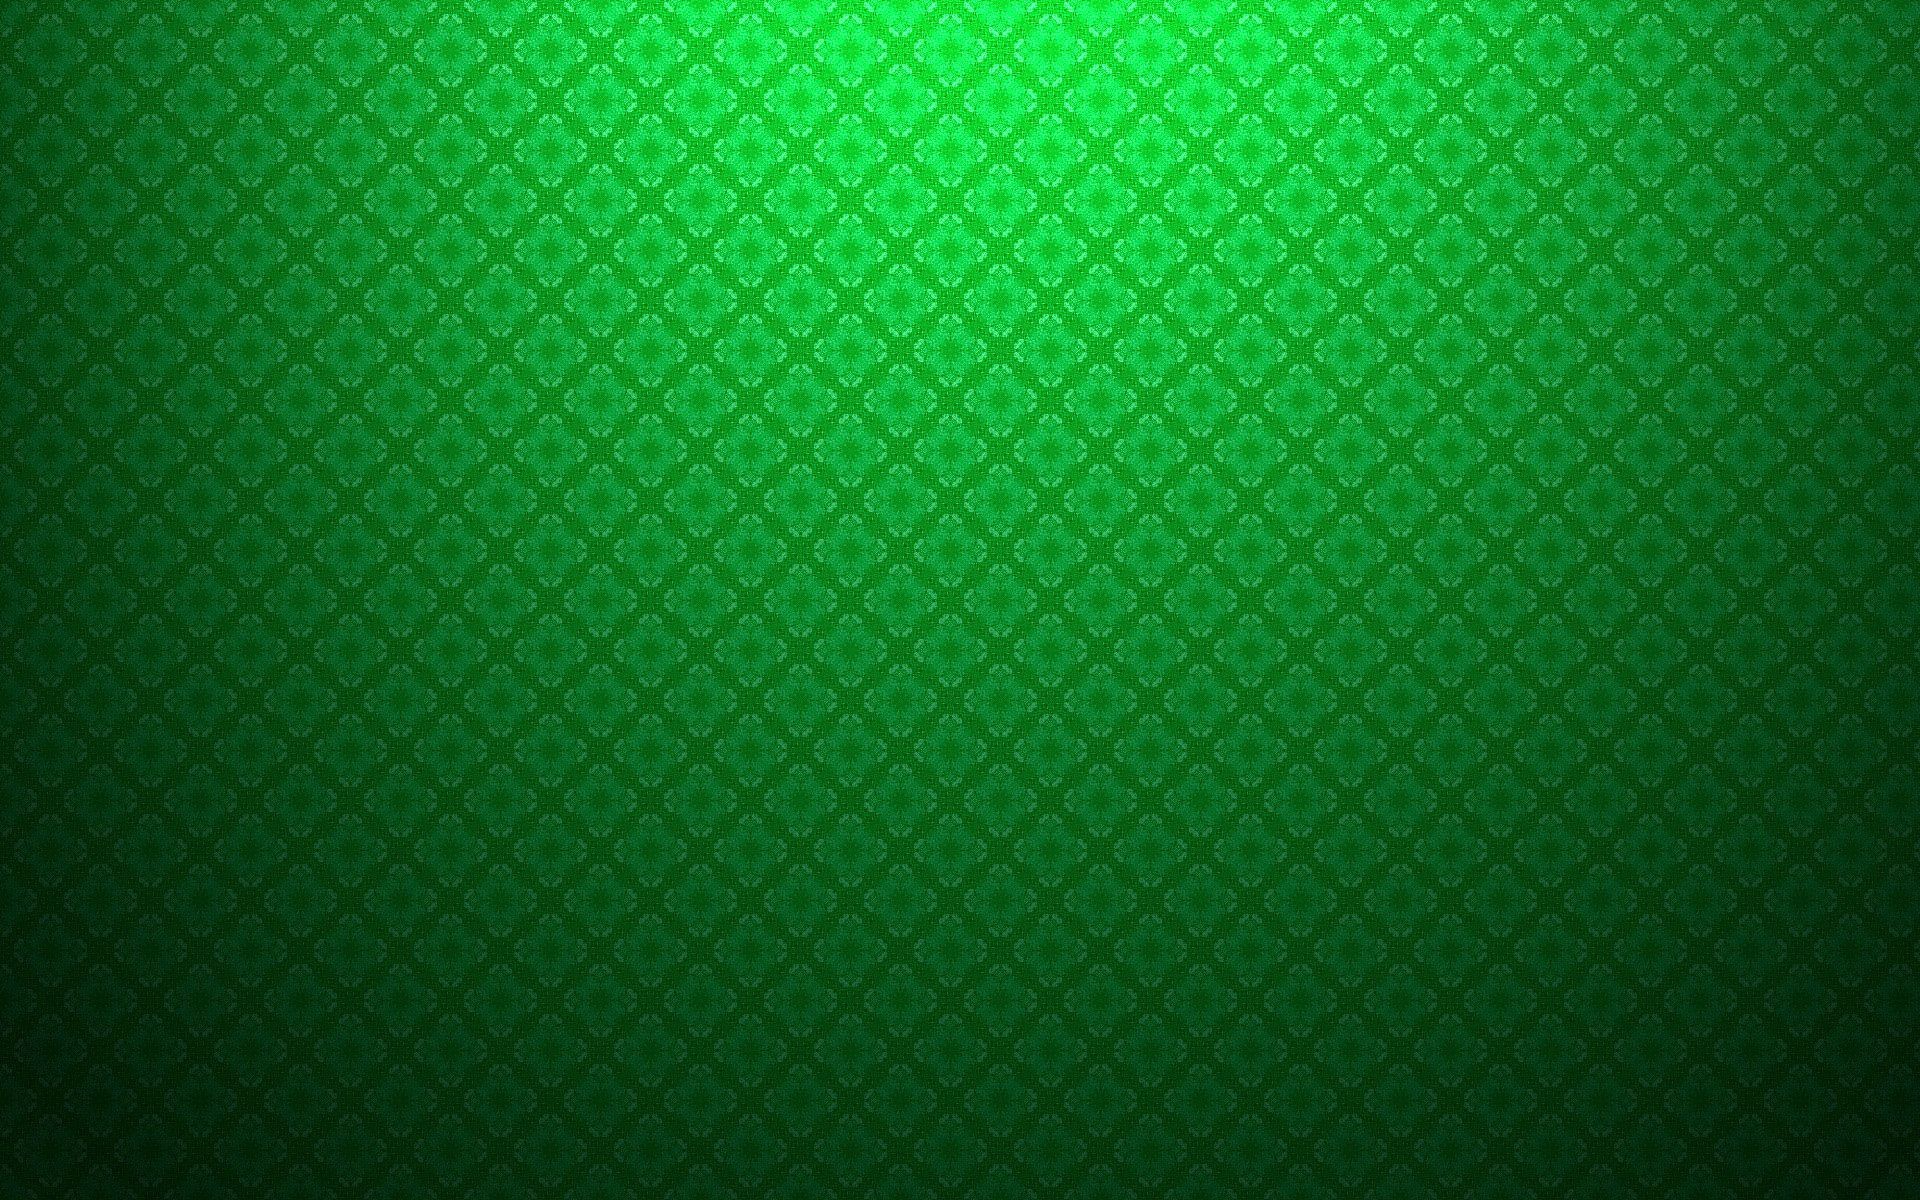 Green Background Images - WallpaperSafari